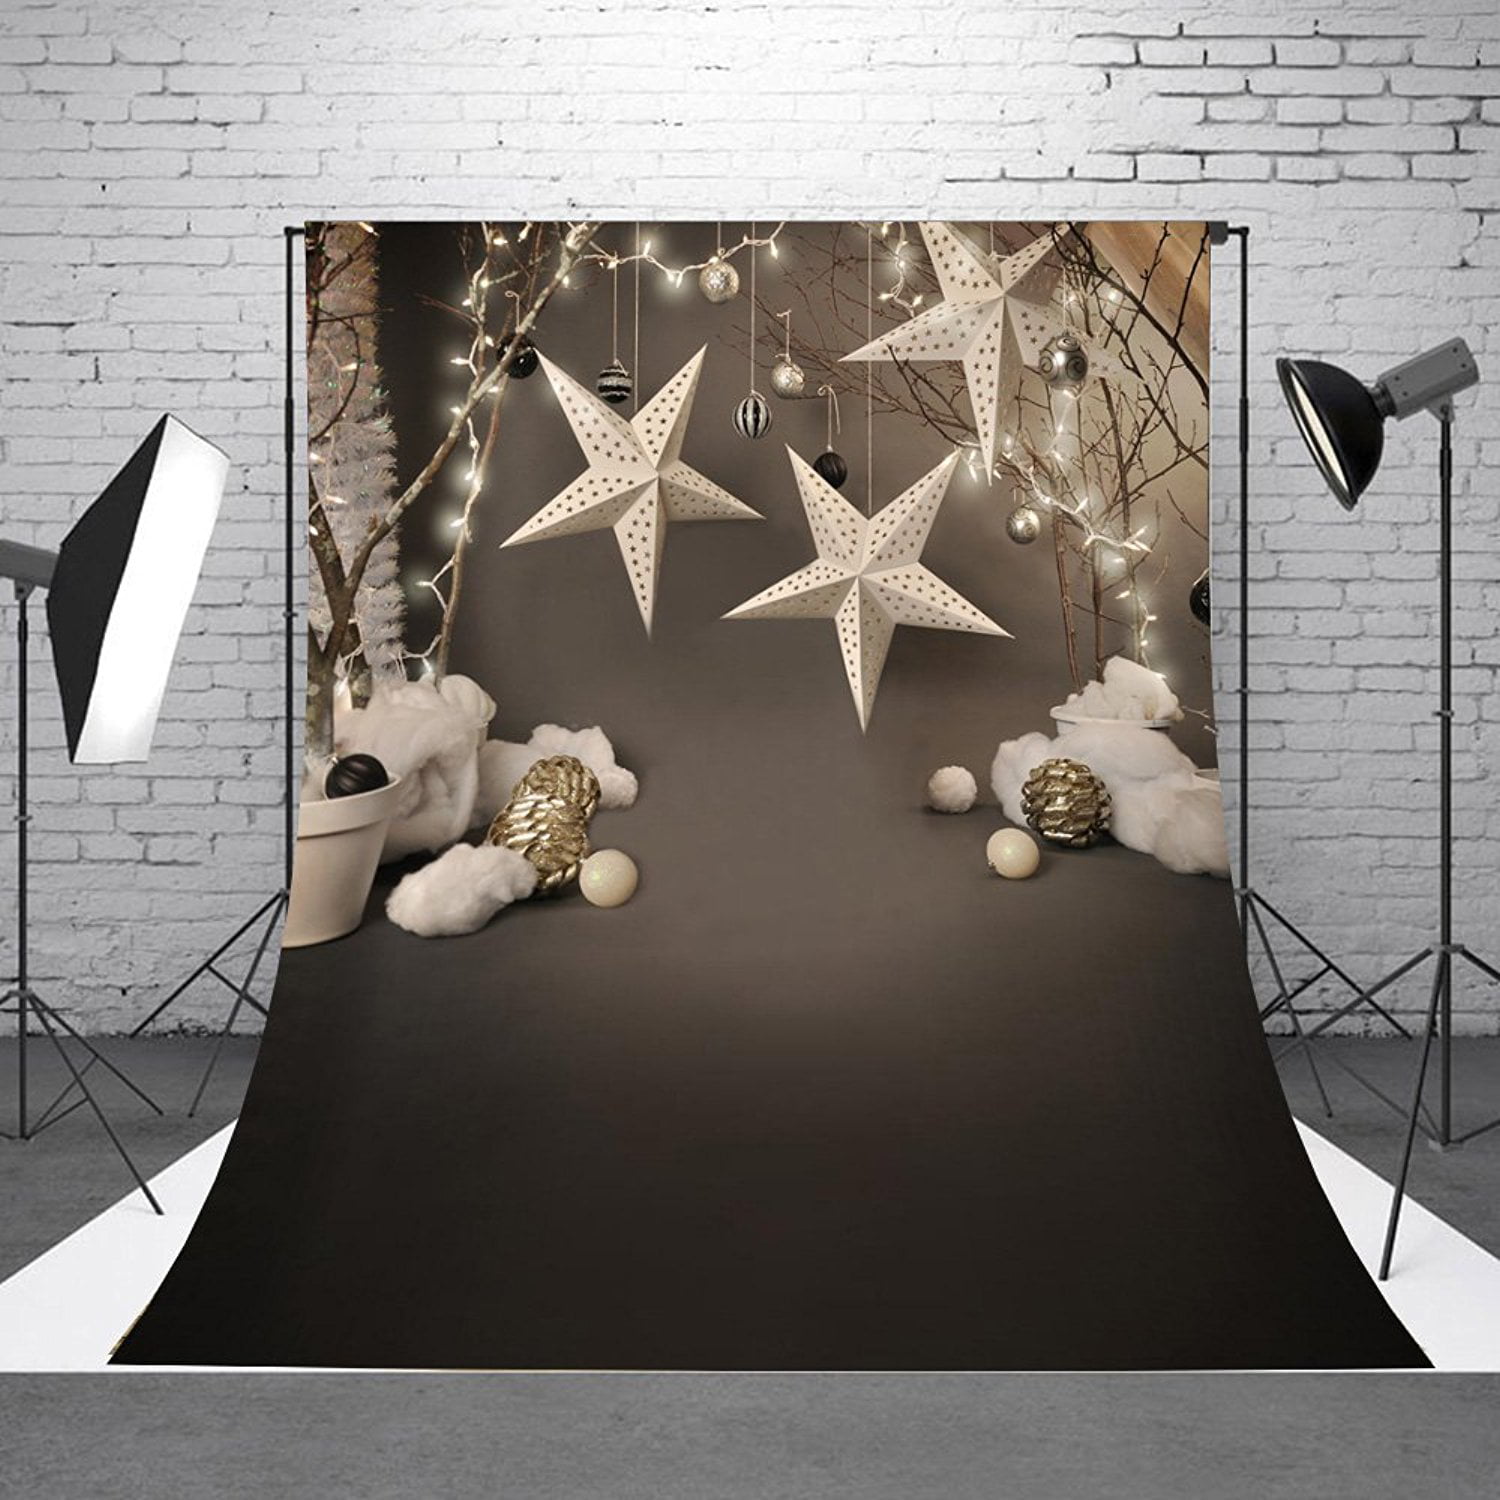 Lelinta 7x5ft Christmas Background Xmas Theme Photography Pictorial Cloth Customized Backdrop Studio Prop